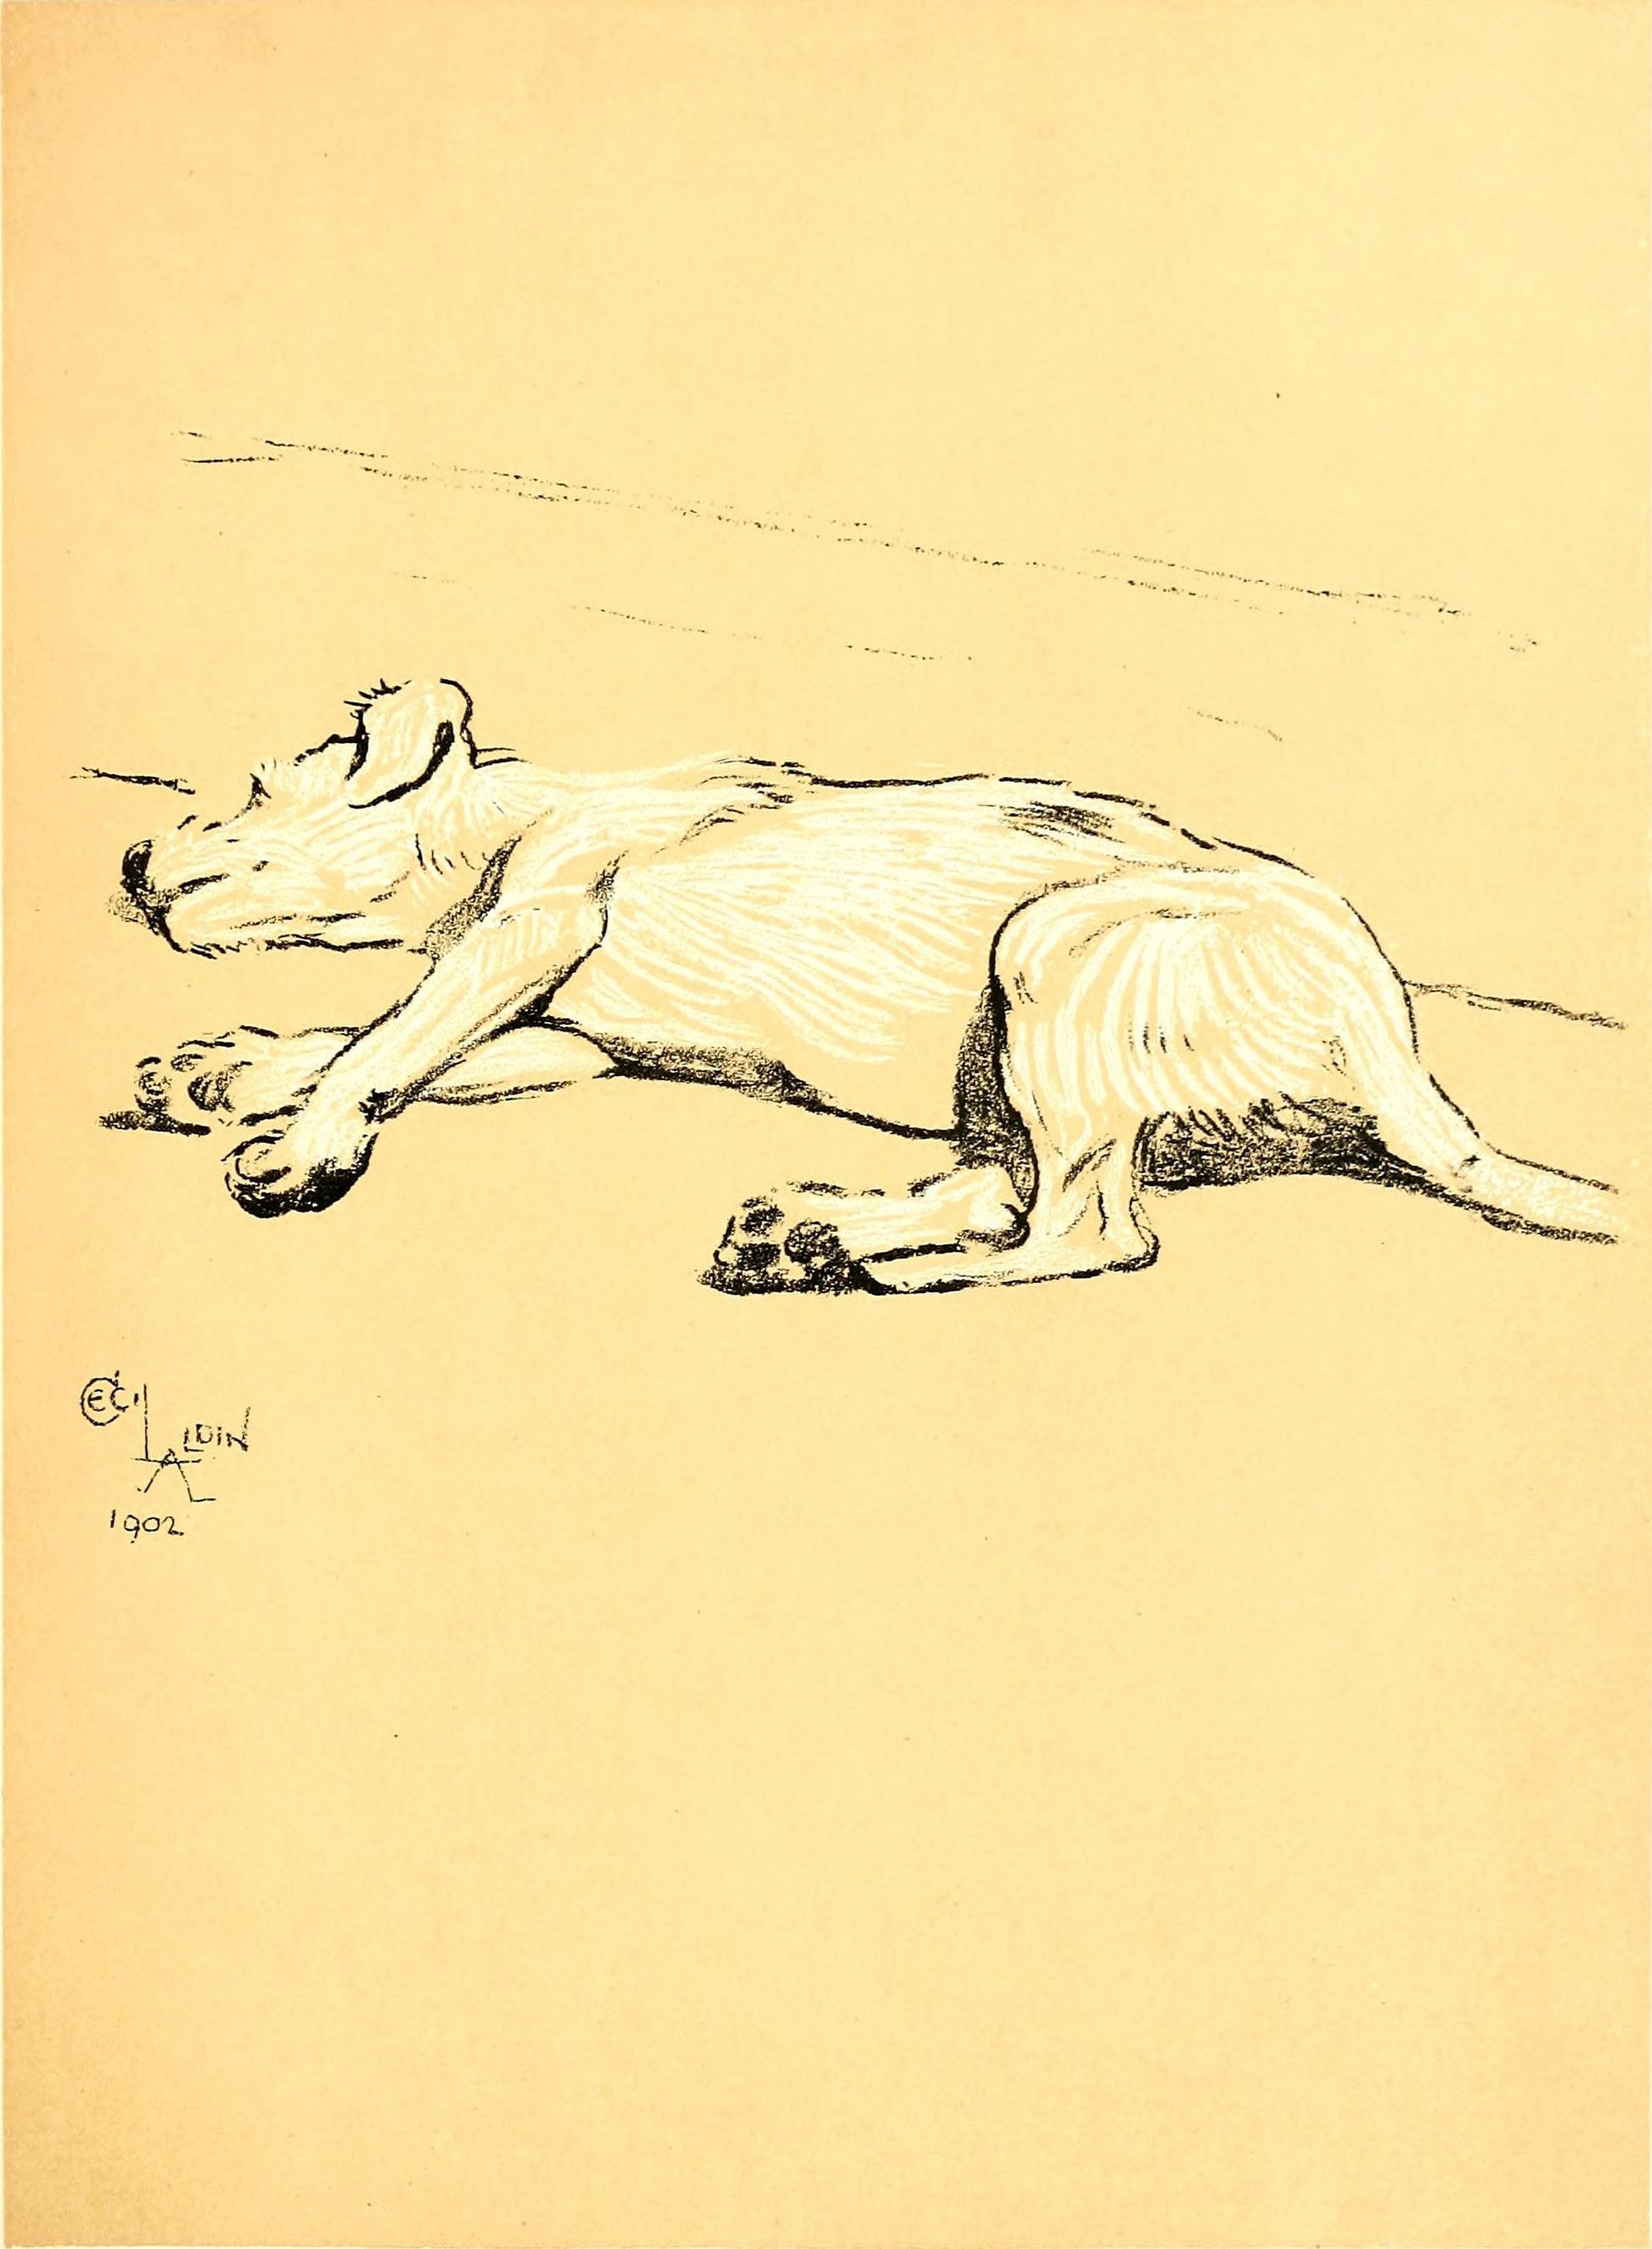 Sleeping dog (1900s) | Vintage dog prints | Cecil Aldin Posters, Prints, & Visual Artwork The Trumpet Shop   